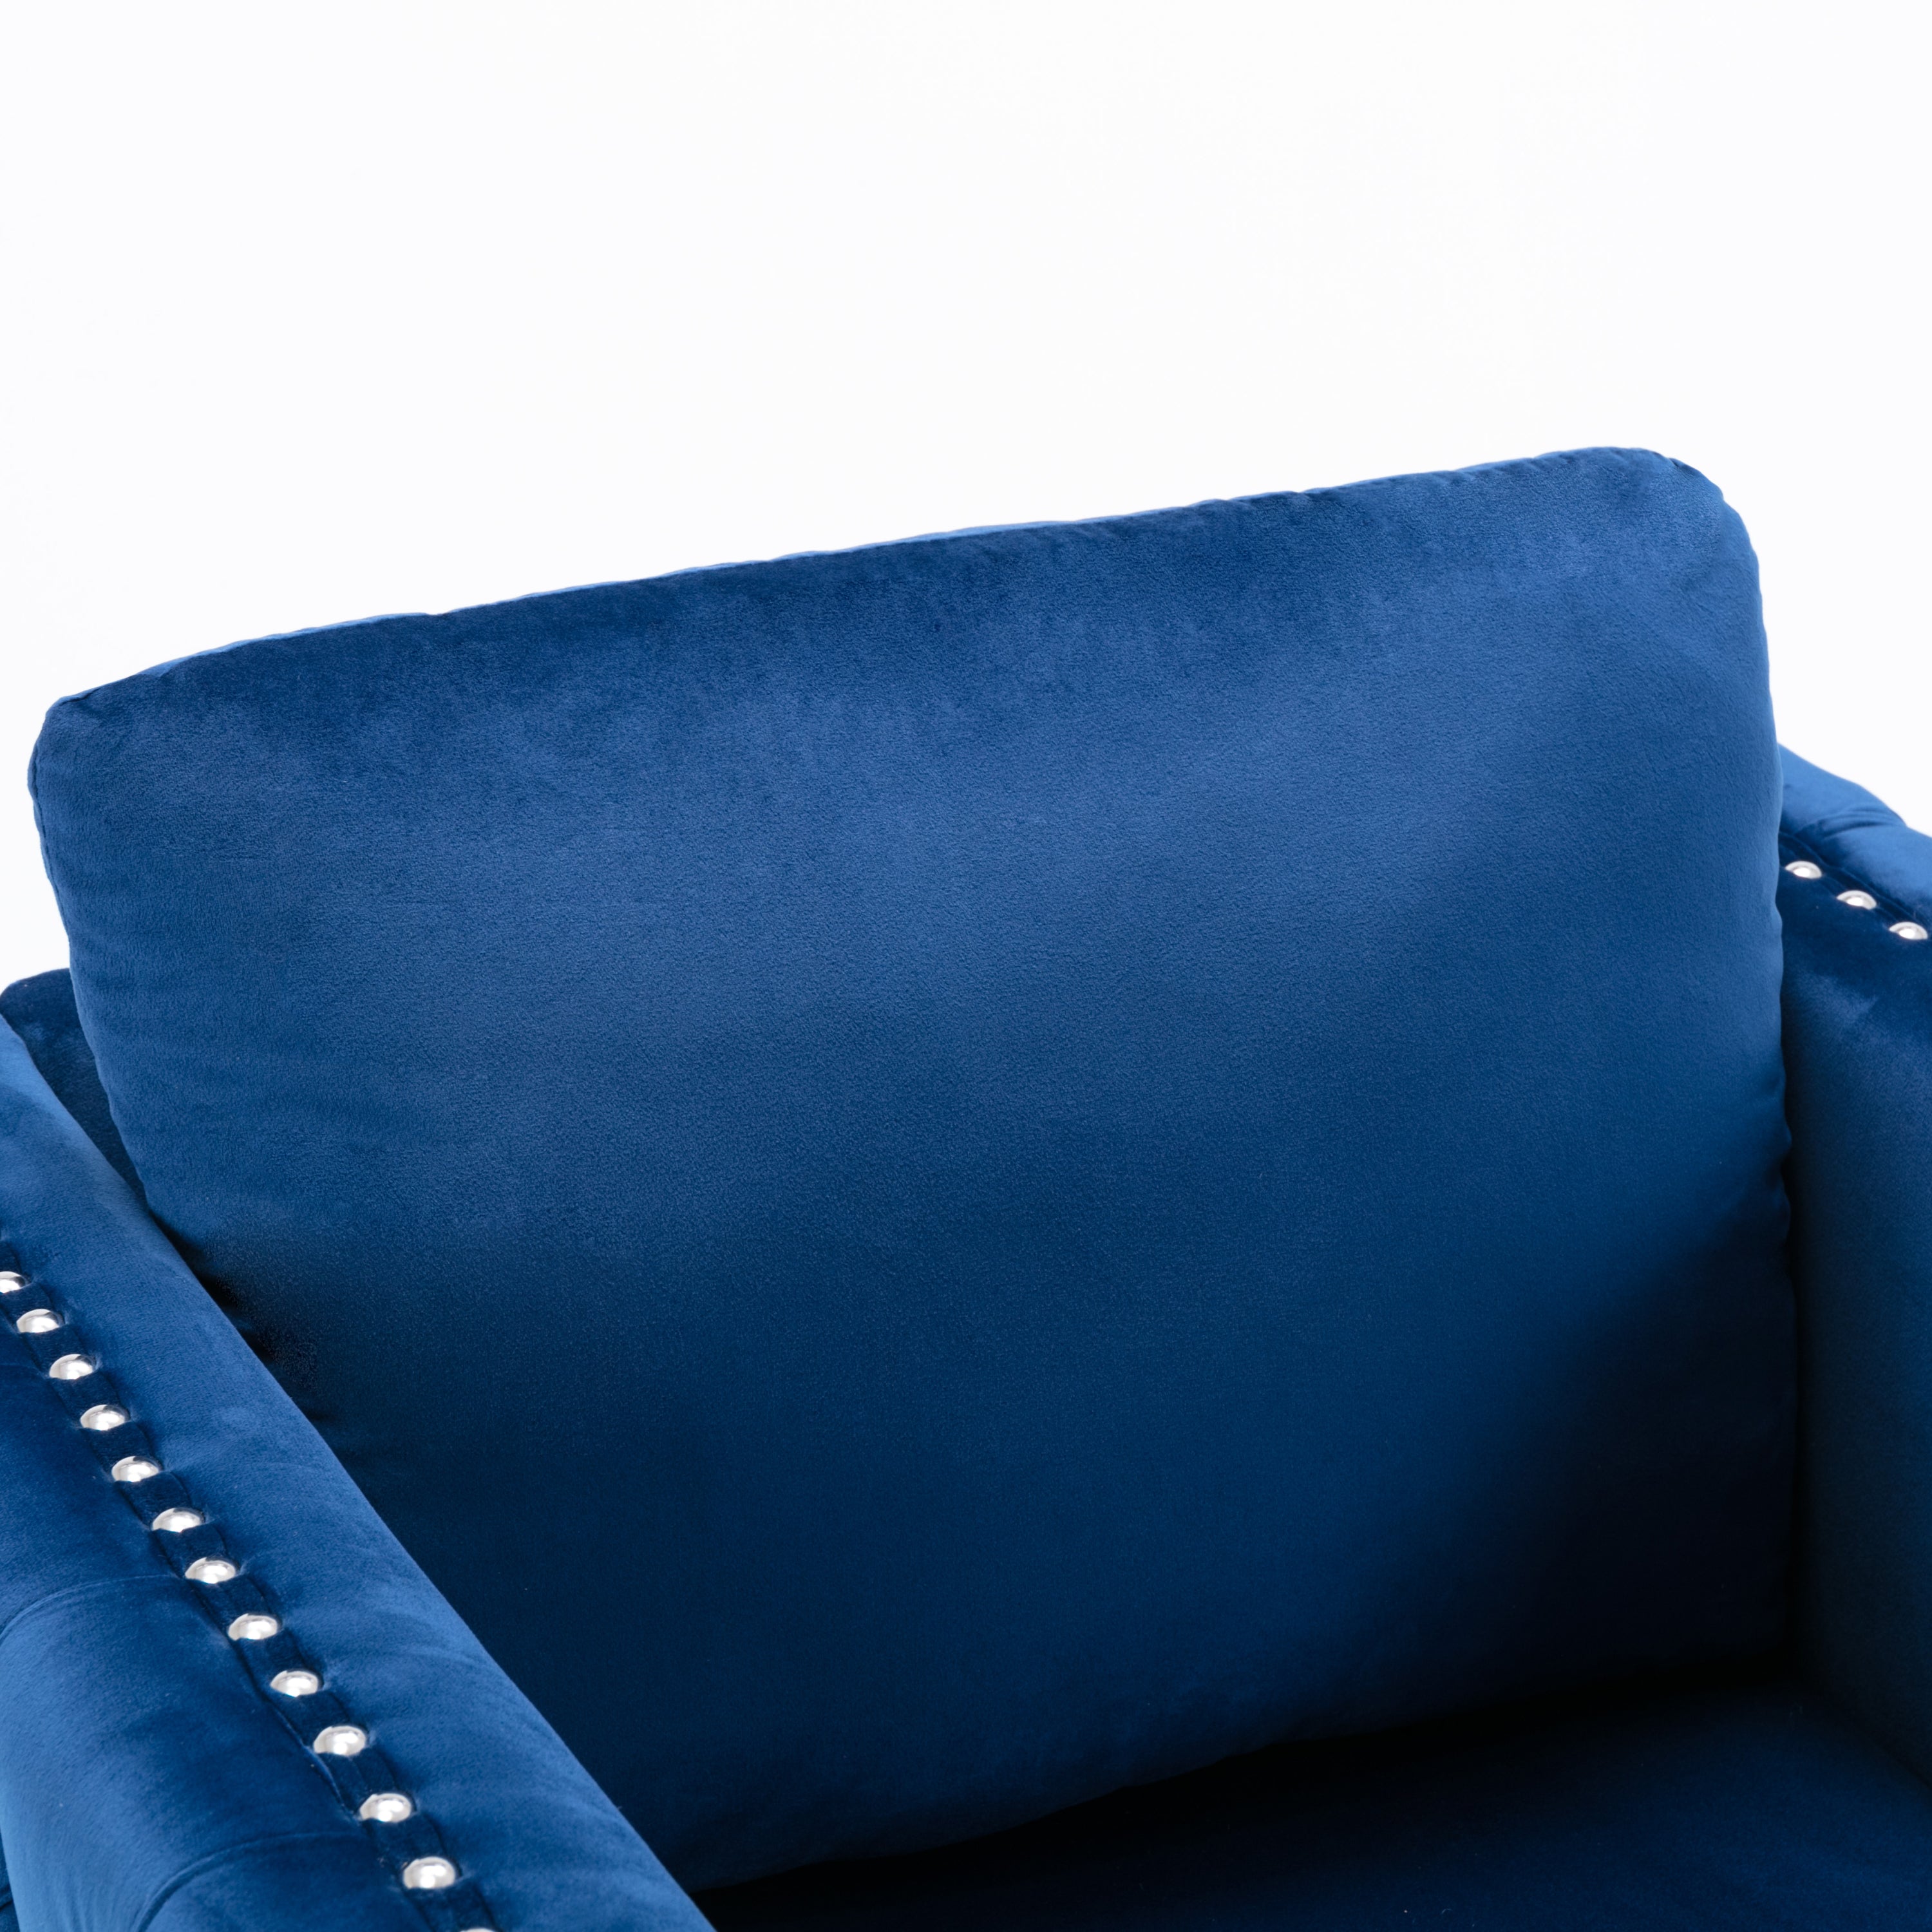 Modern Blue Velvet Armchair Tufted Button Accent Chair